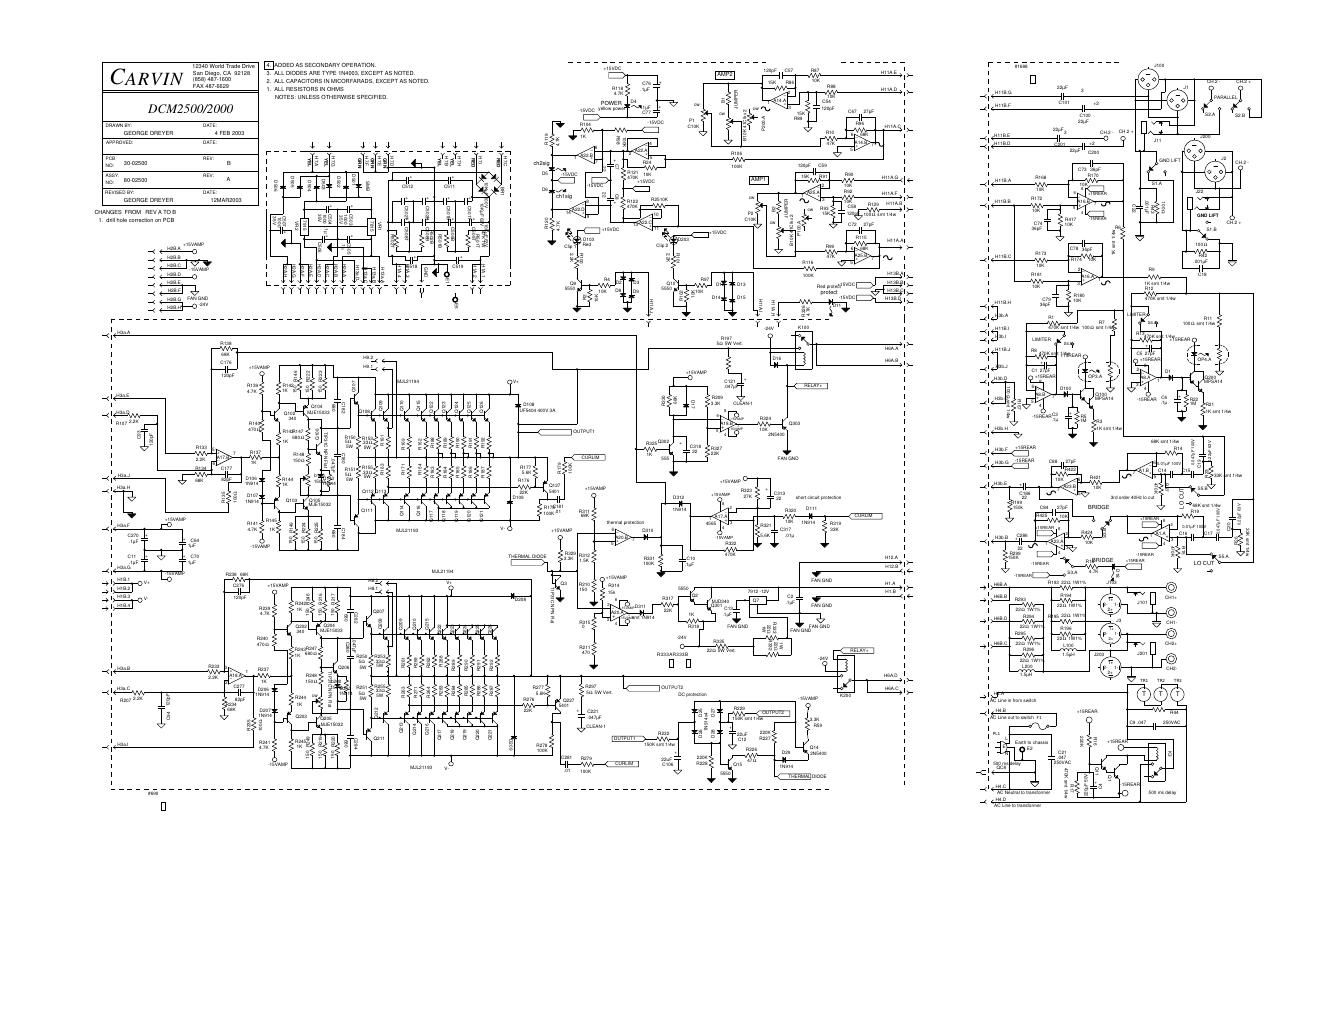 carvin dcm 2500 2000 power amp rev b schematic